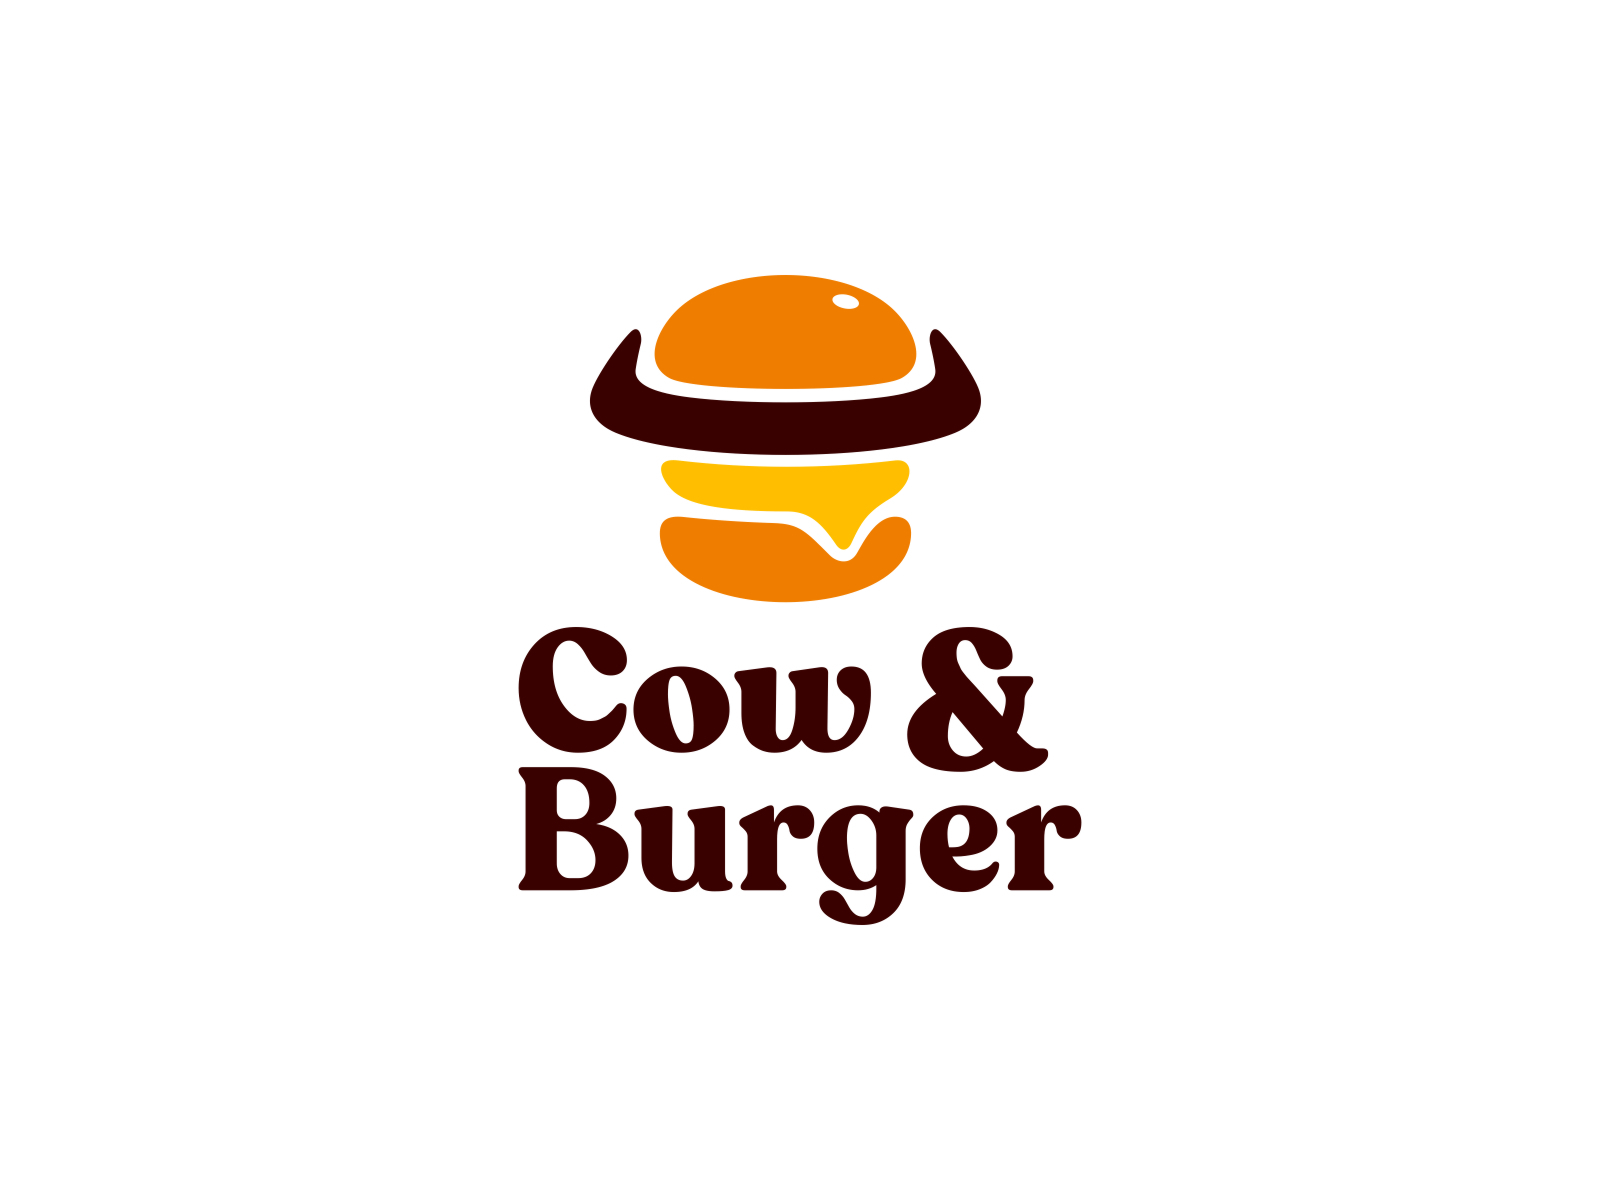 Cow & Burger Logo by R A H A J O E on Dribbble